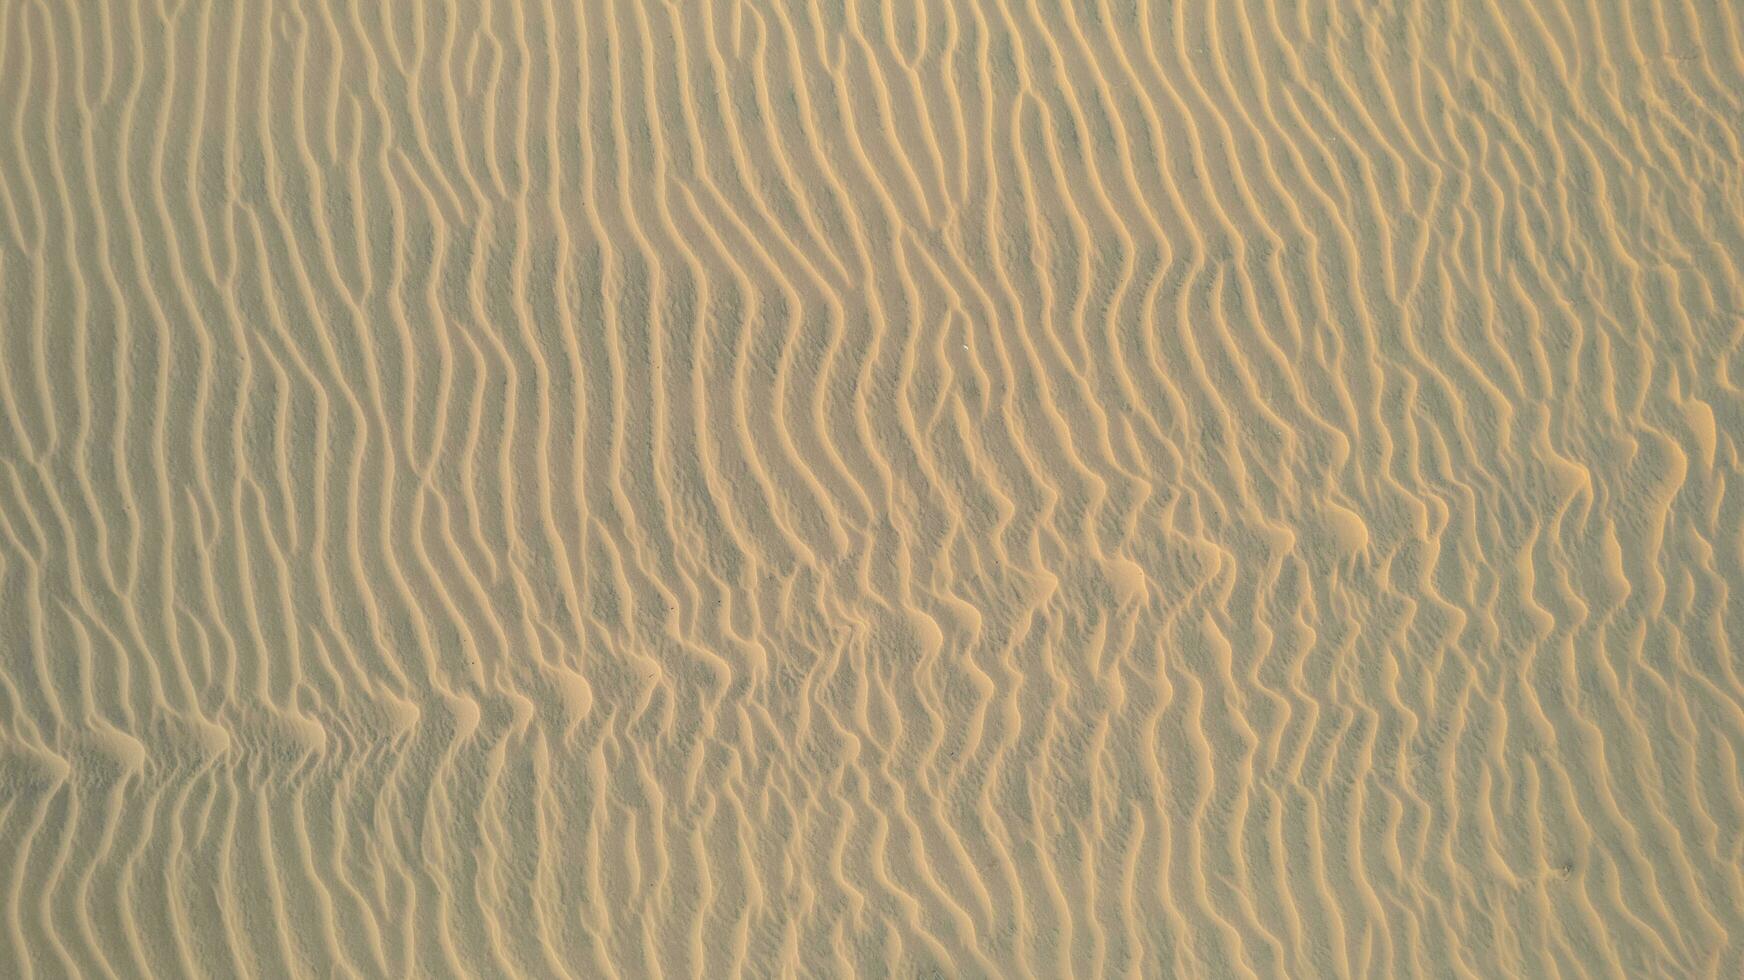 Vietnam rood zand duinen gouden uur foto